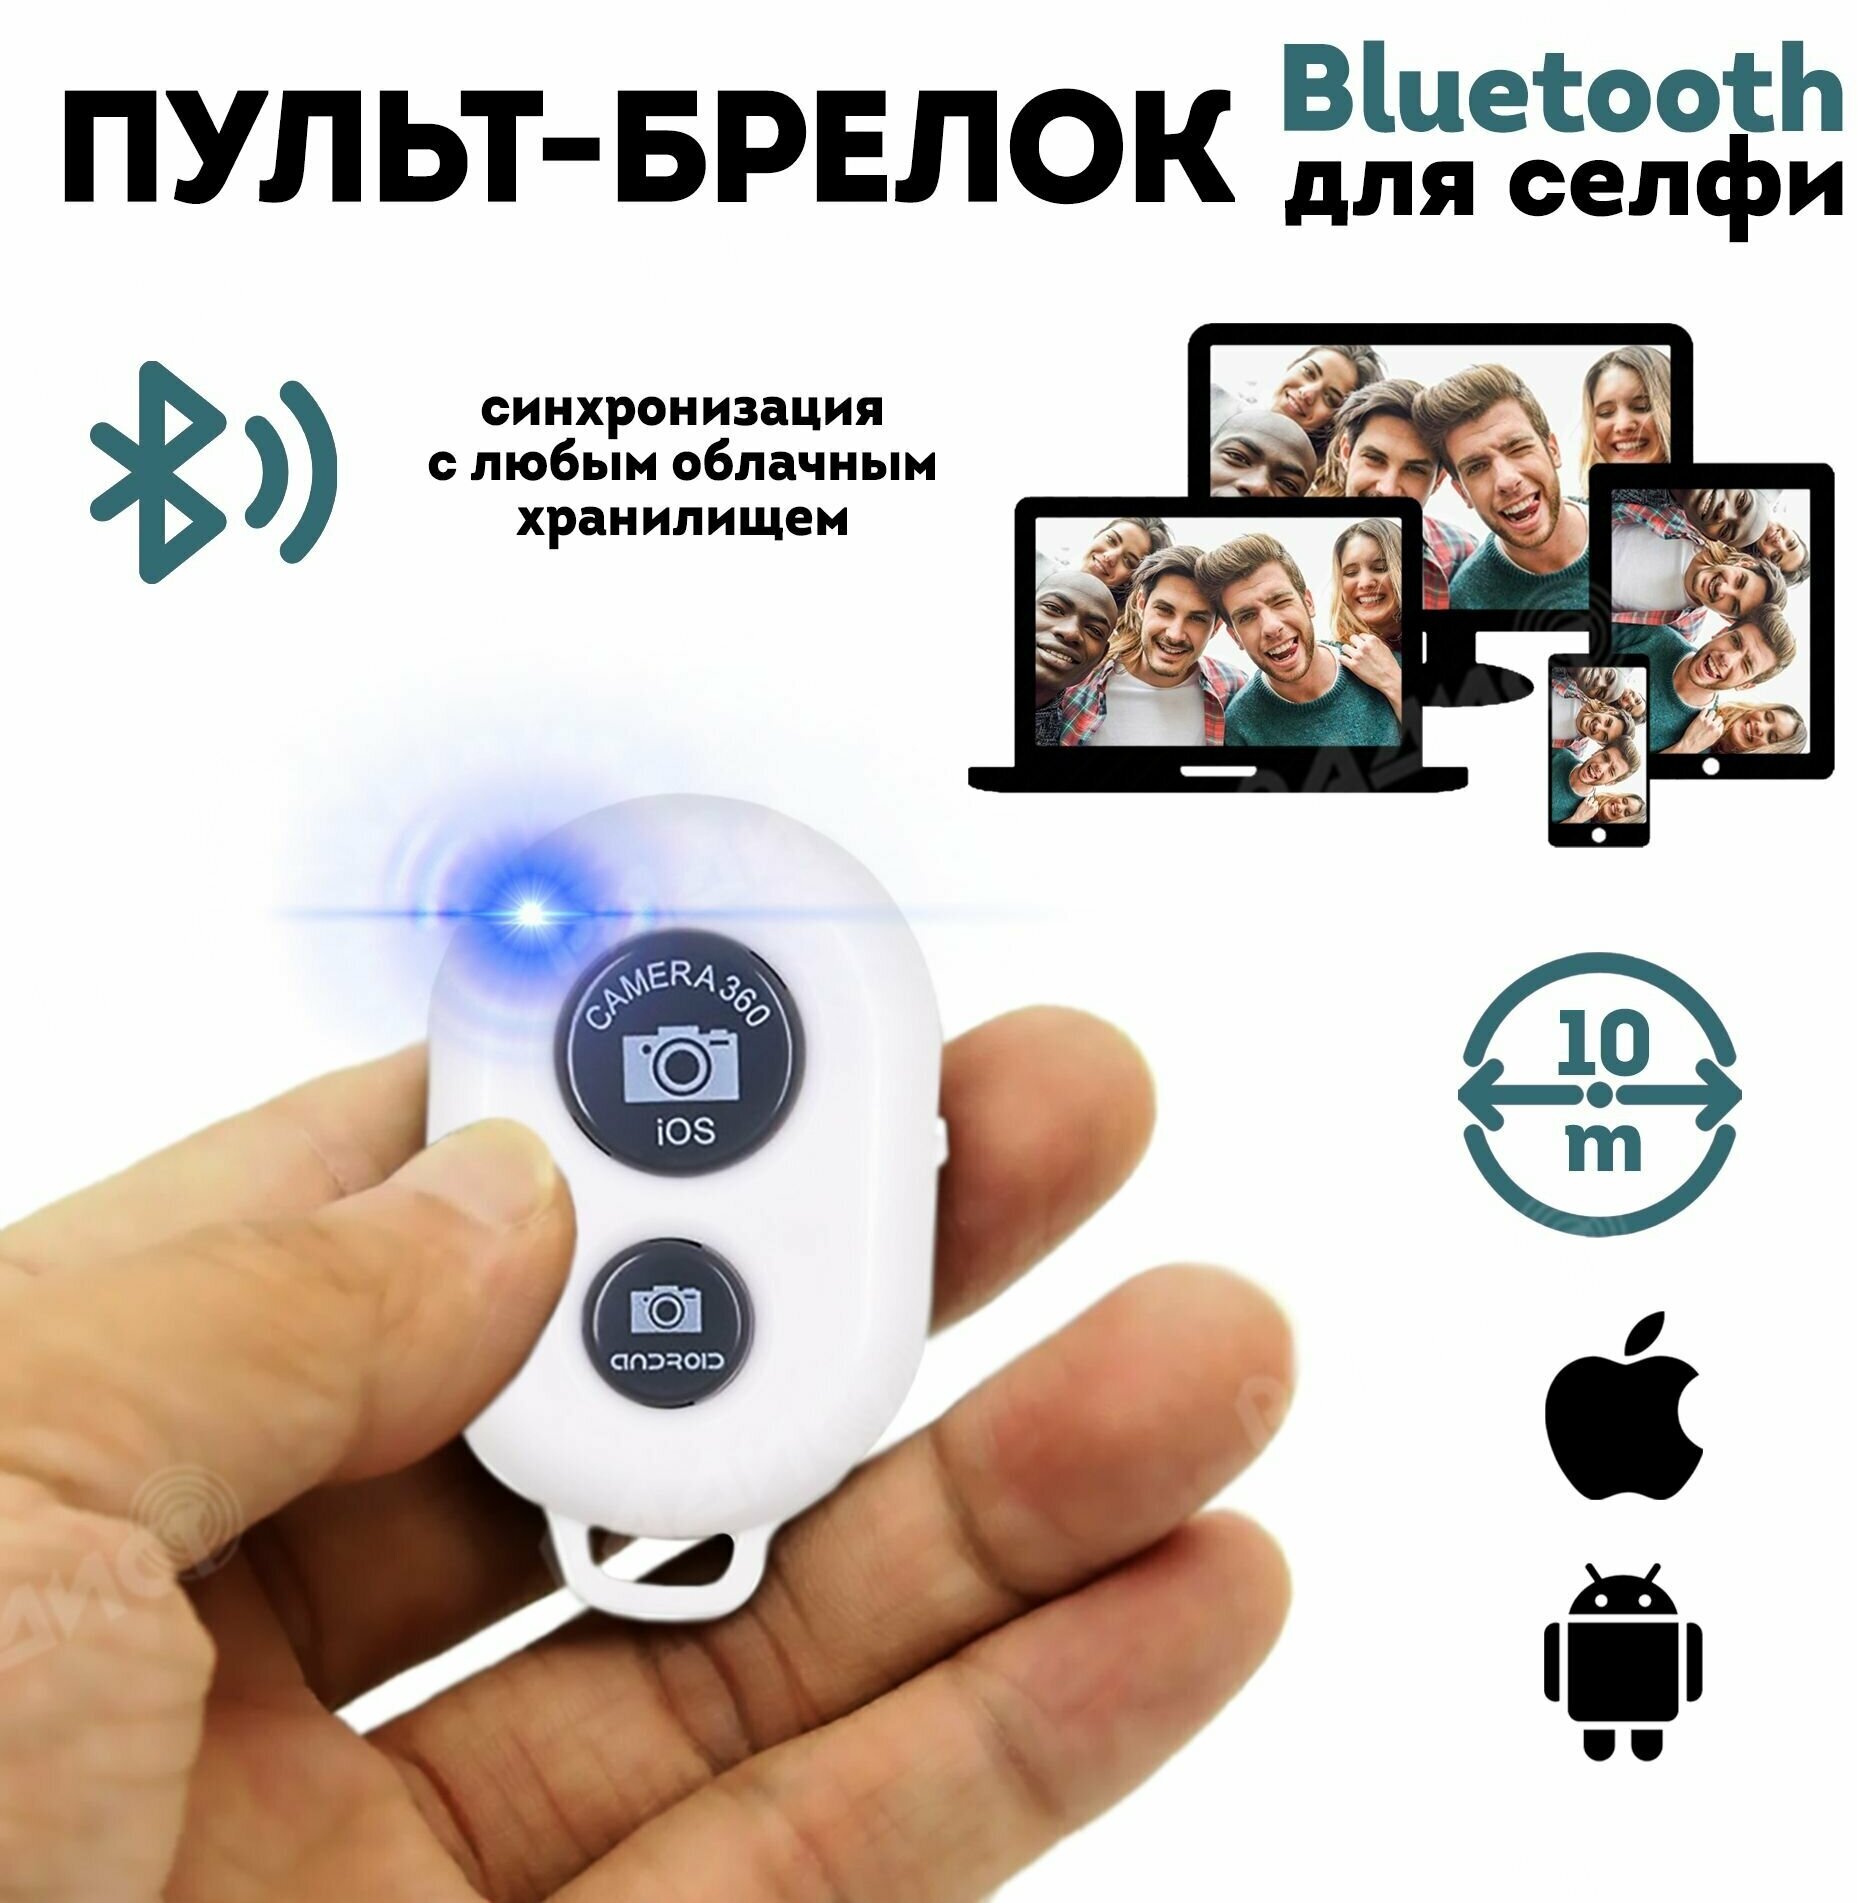 Пульт для селфи Bluetooth / блютуз кнопка для селфи